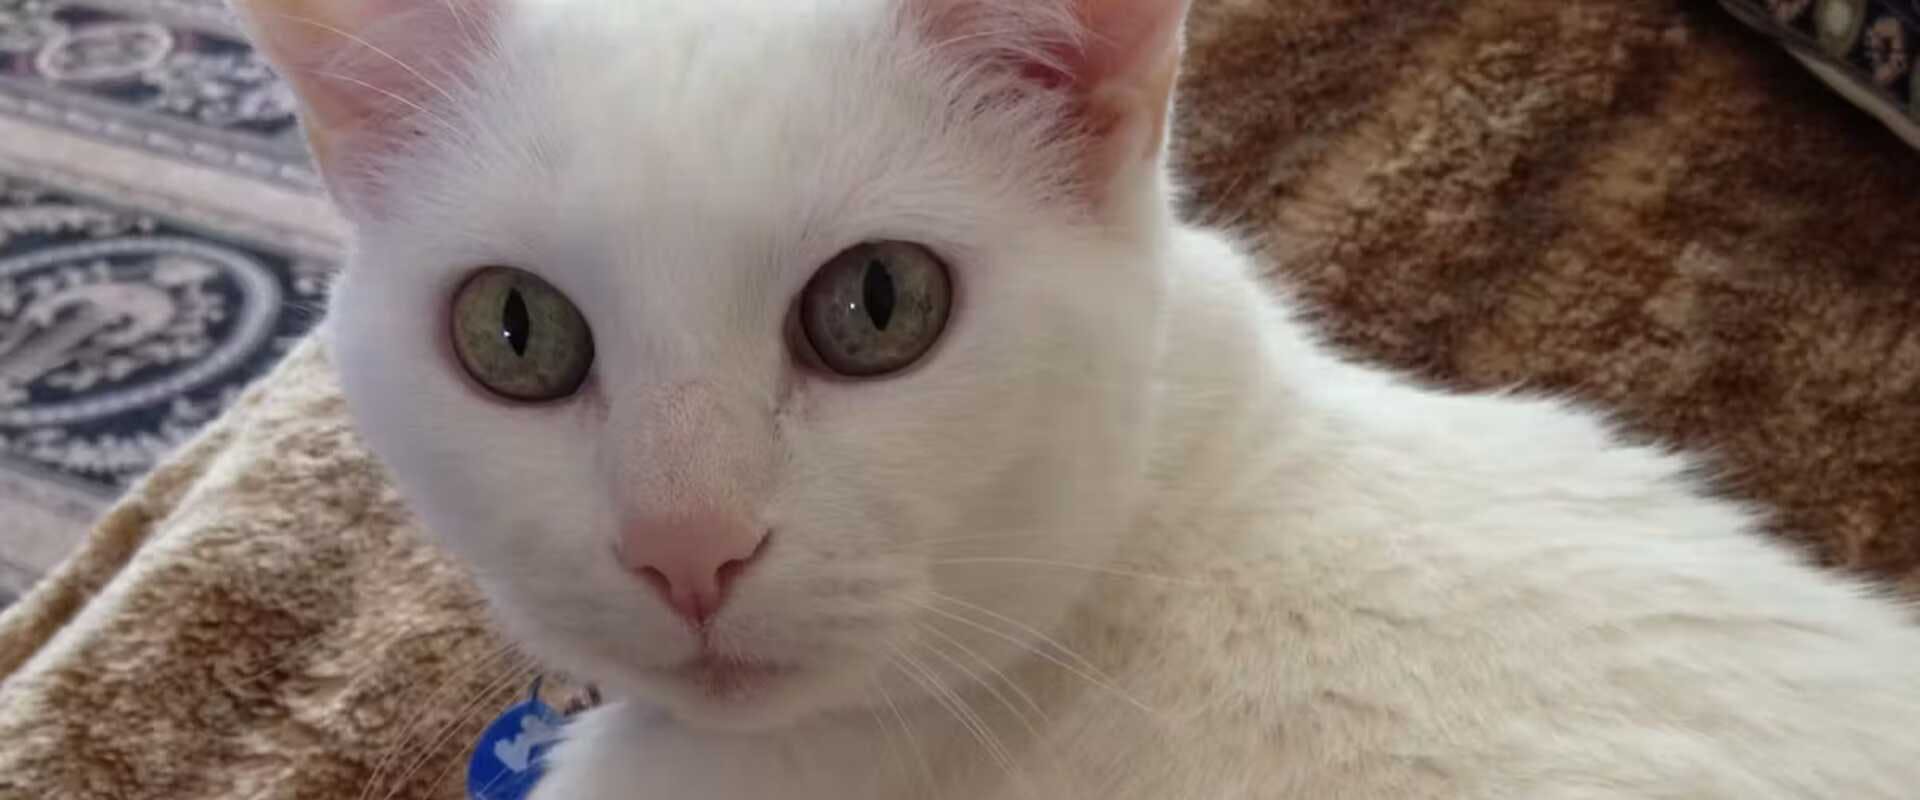 A white cat